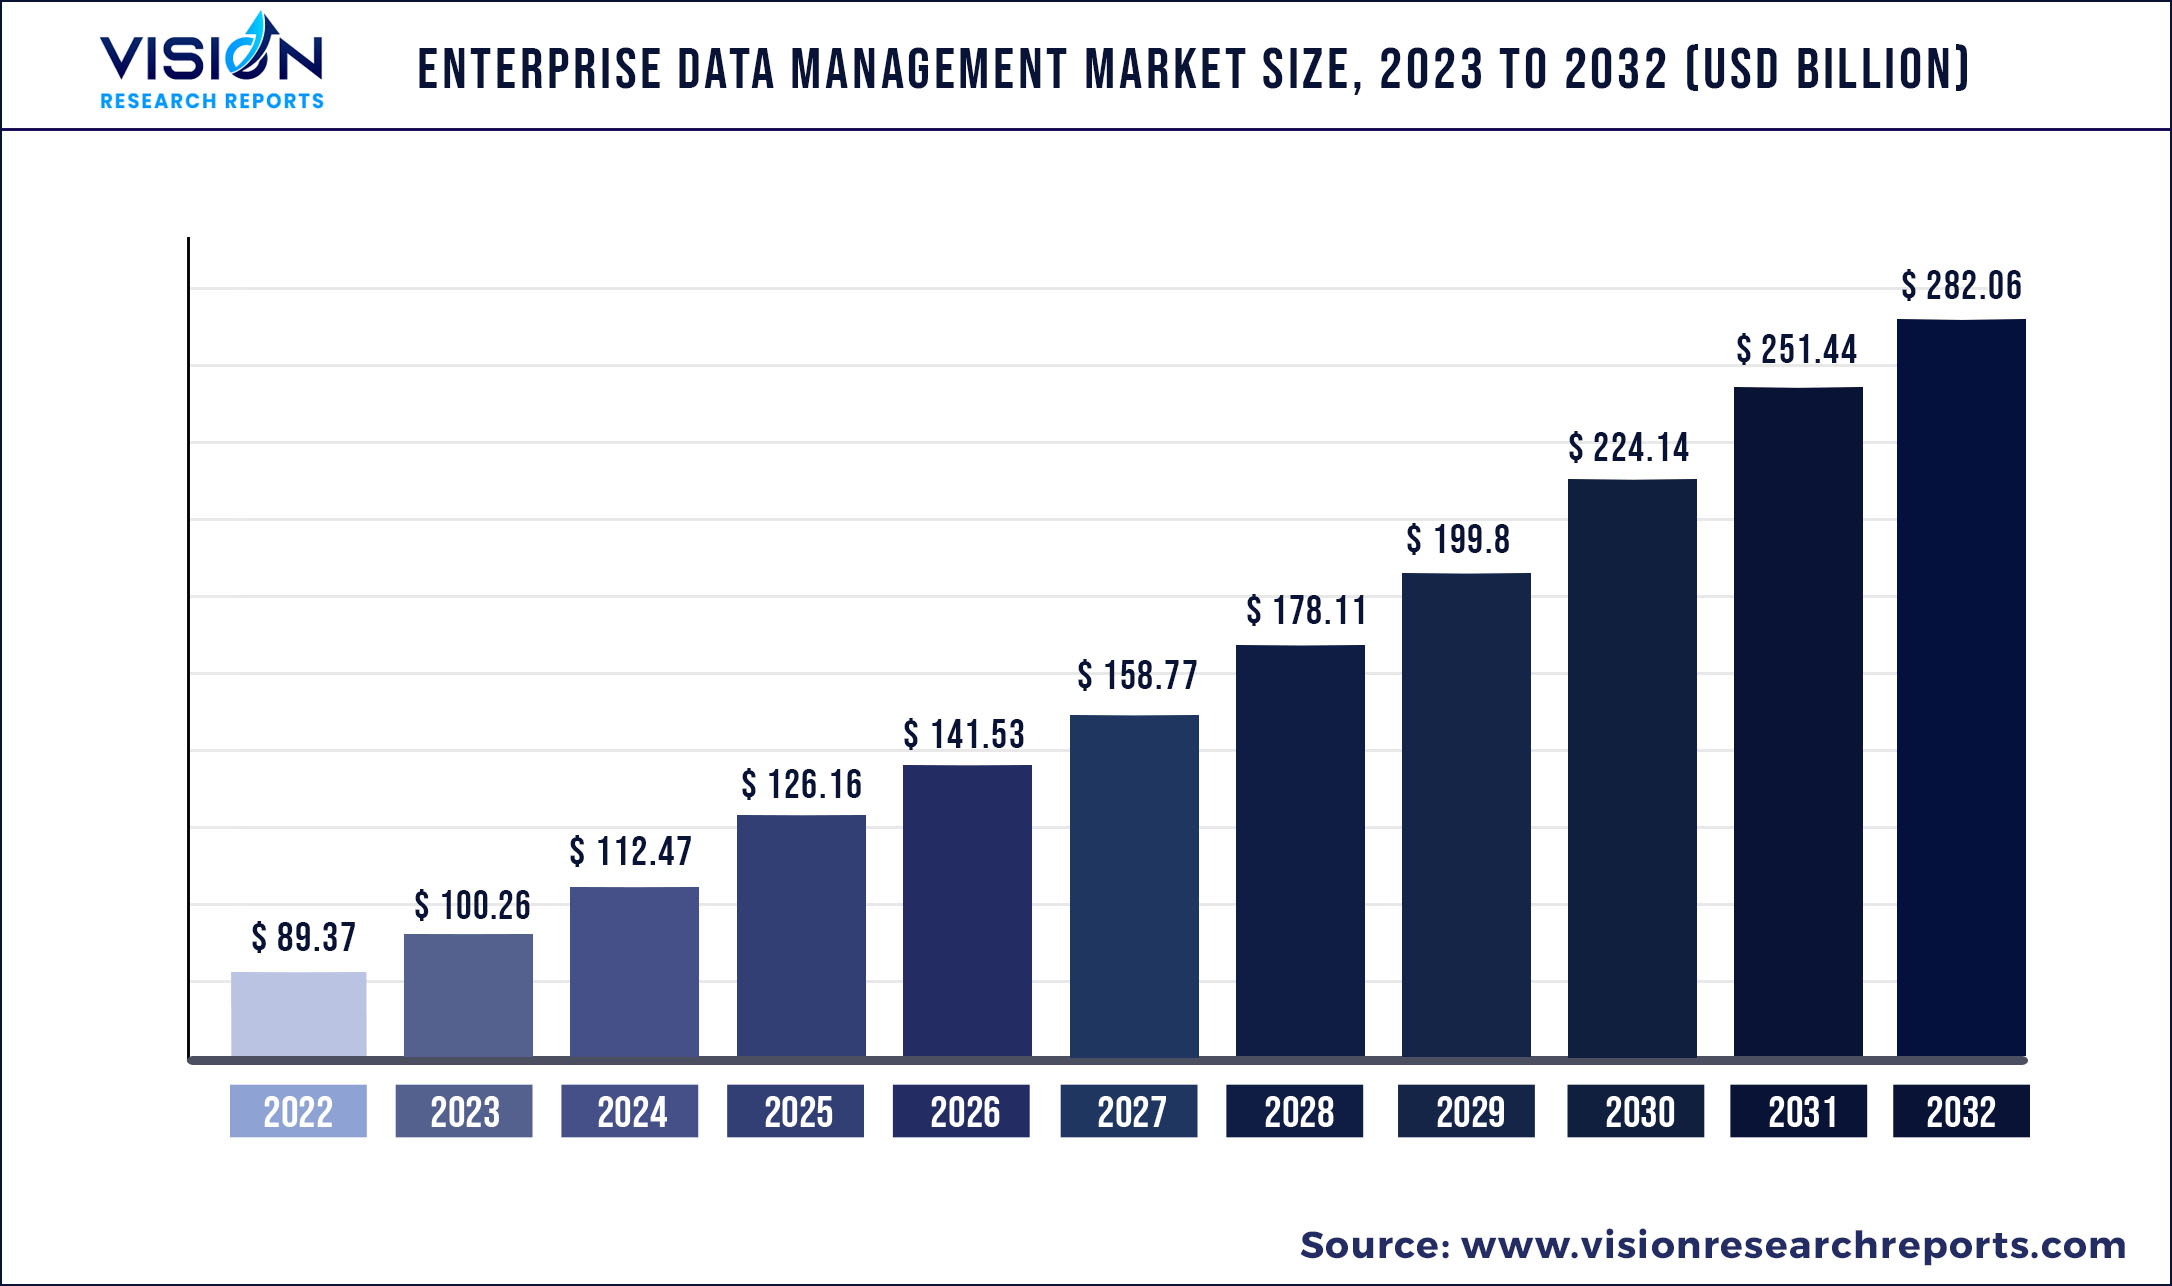 Enterprise Data Management Market Size 2023 to 2032